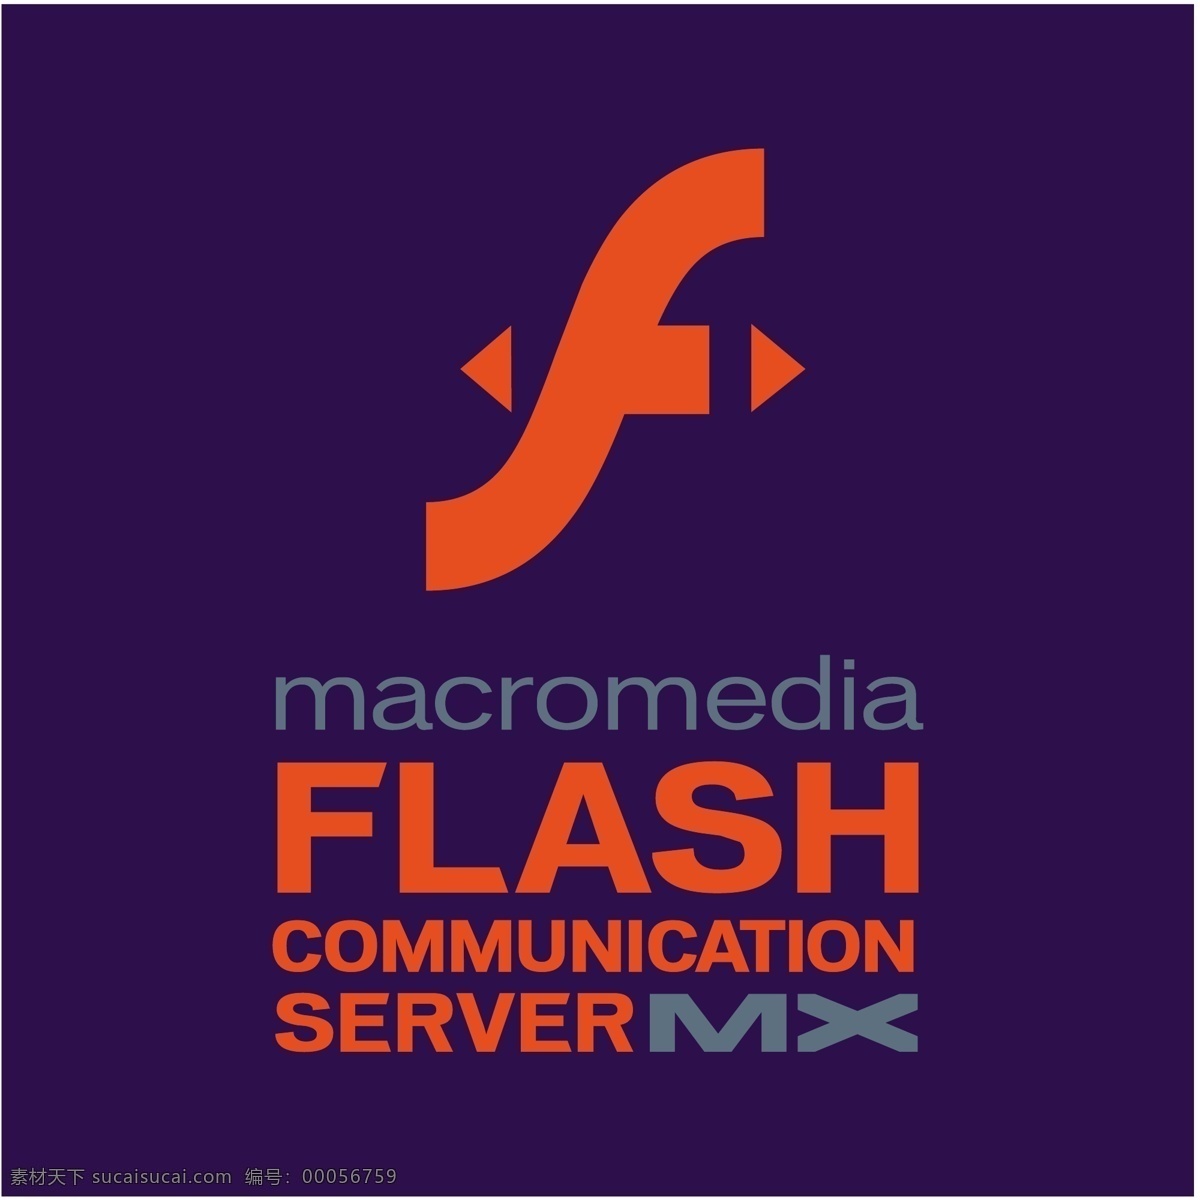 server communication macromedia flash 免费 mx 标志 通信 服务器 自由 psd源文件 logo设计